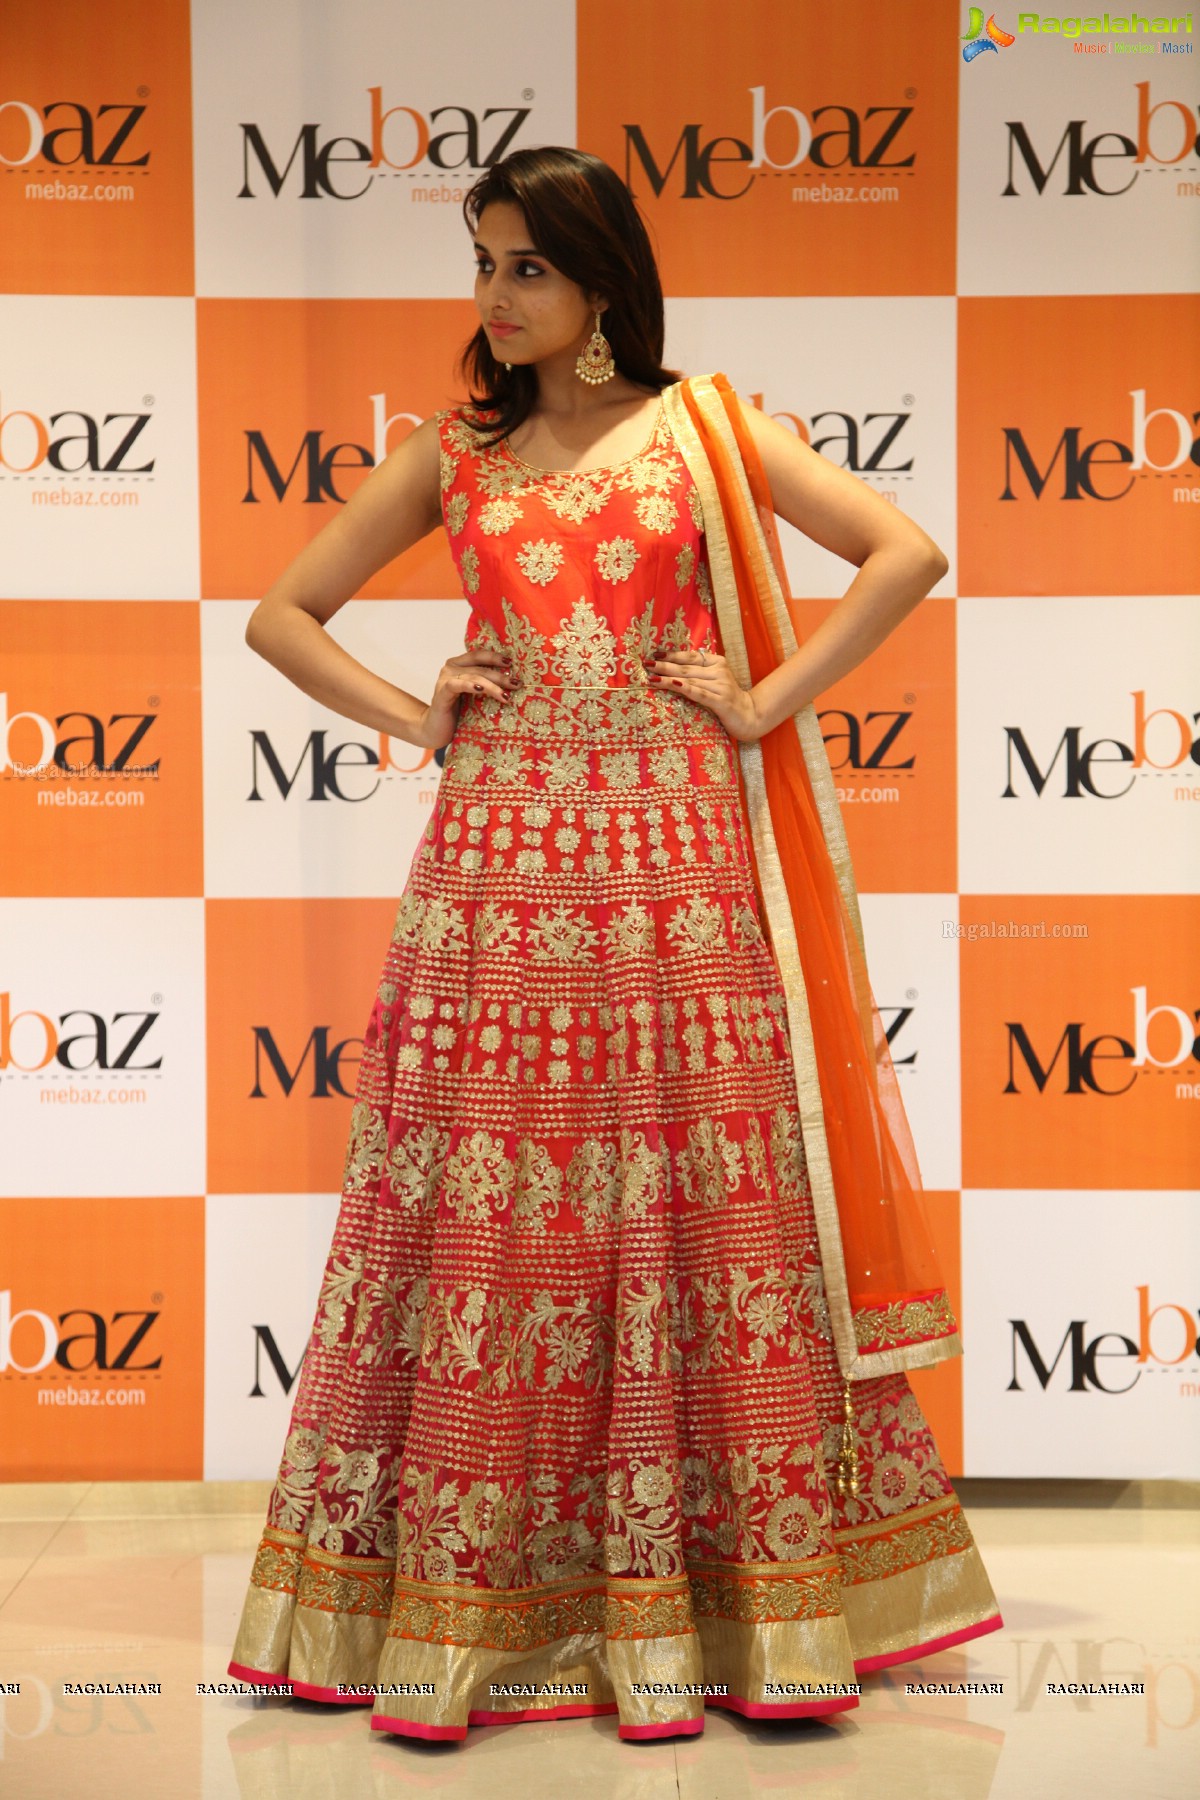 Mebaz Designer Wedding Collection 2016 Launch at Vizag